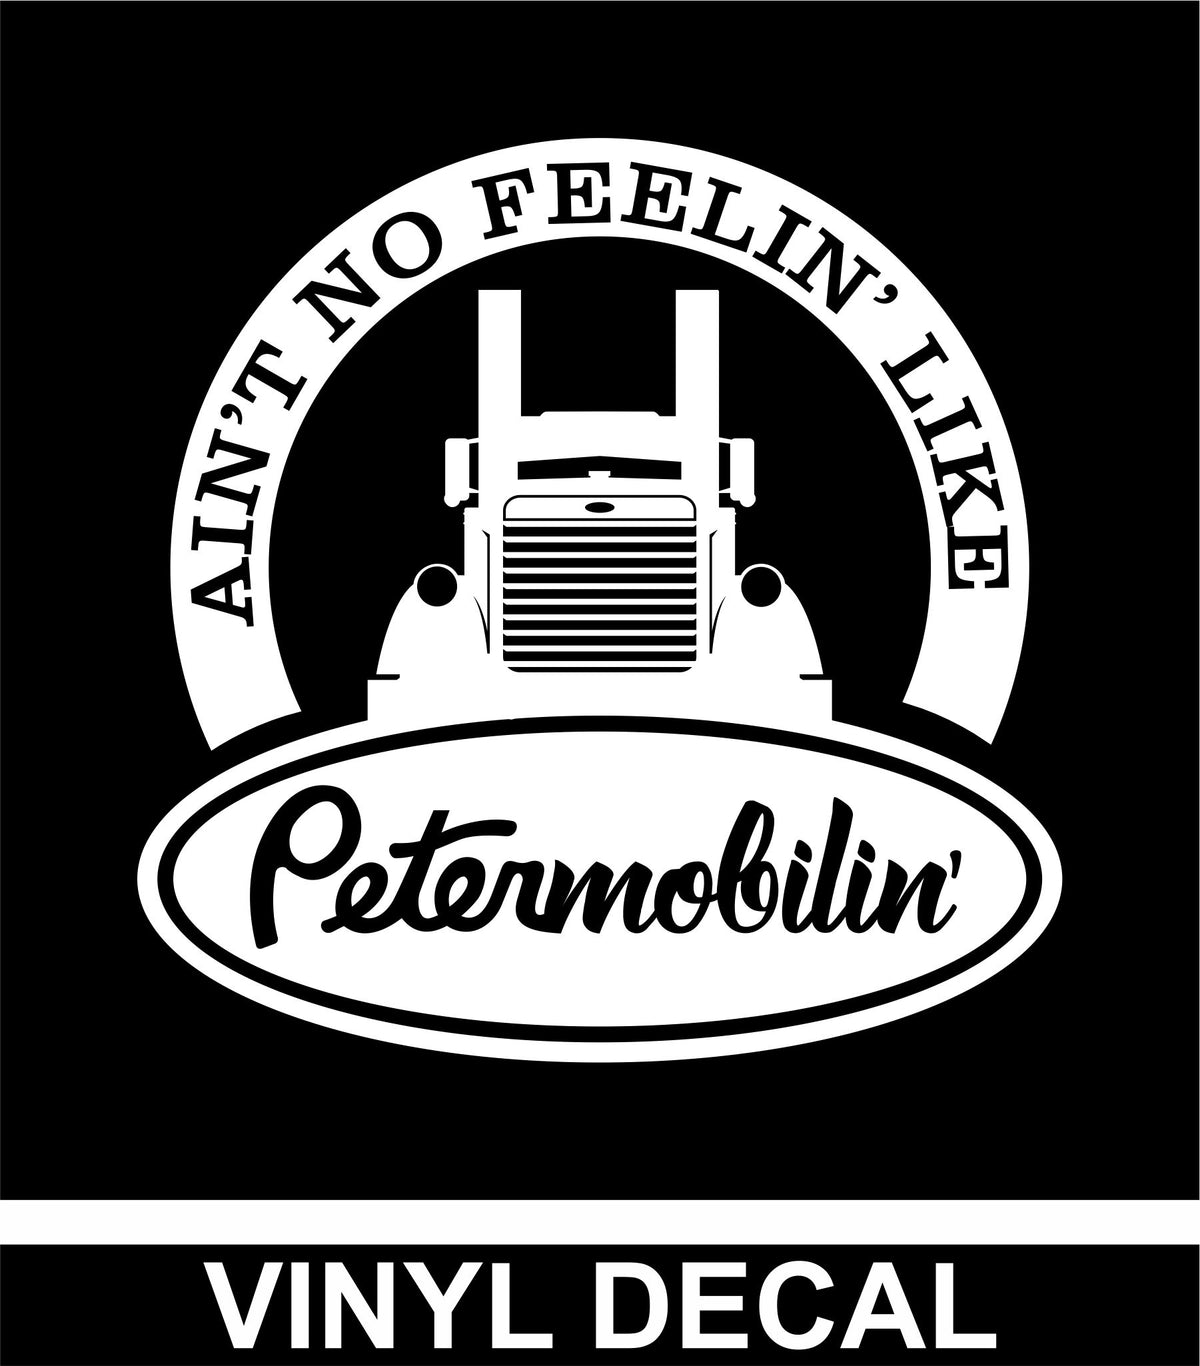 Ain't No Feelin' Like Petermobilin' - Vinyl Decal - Free Shipping